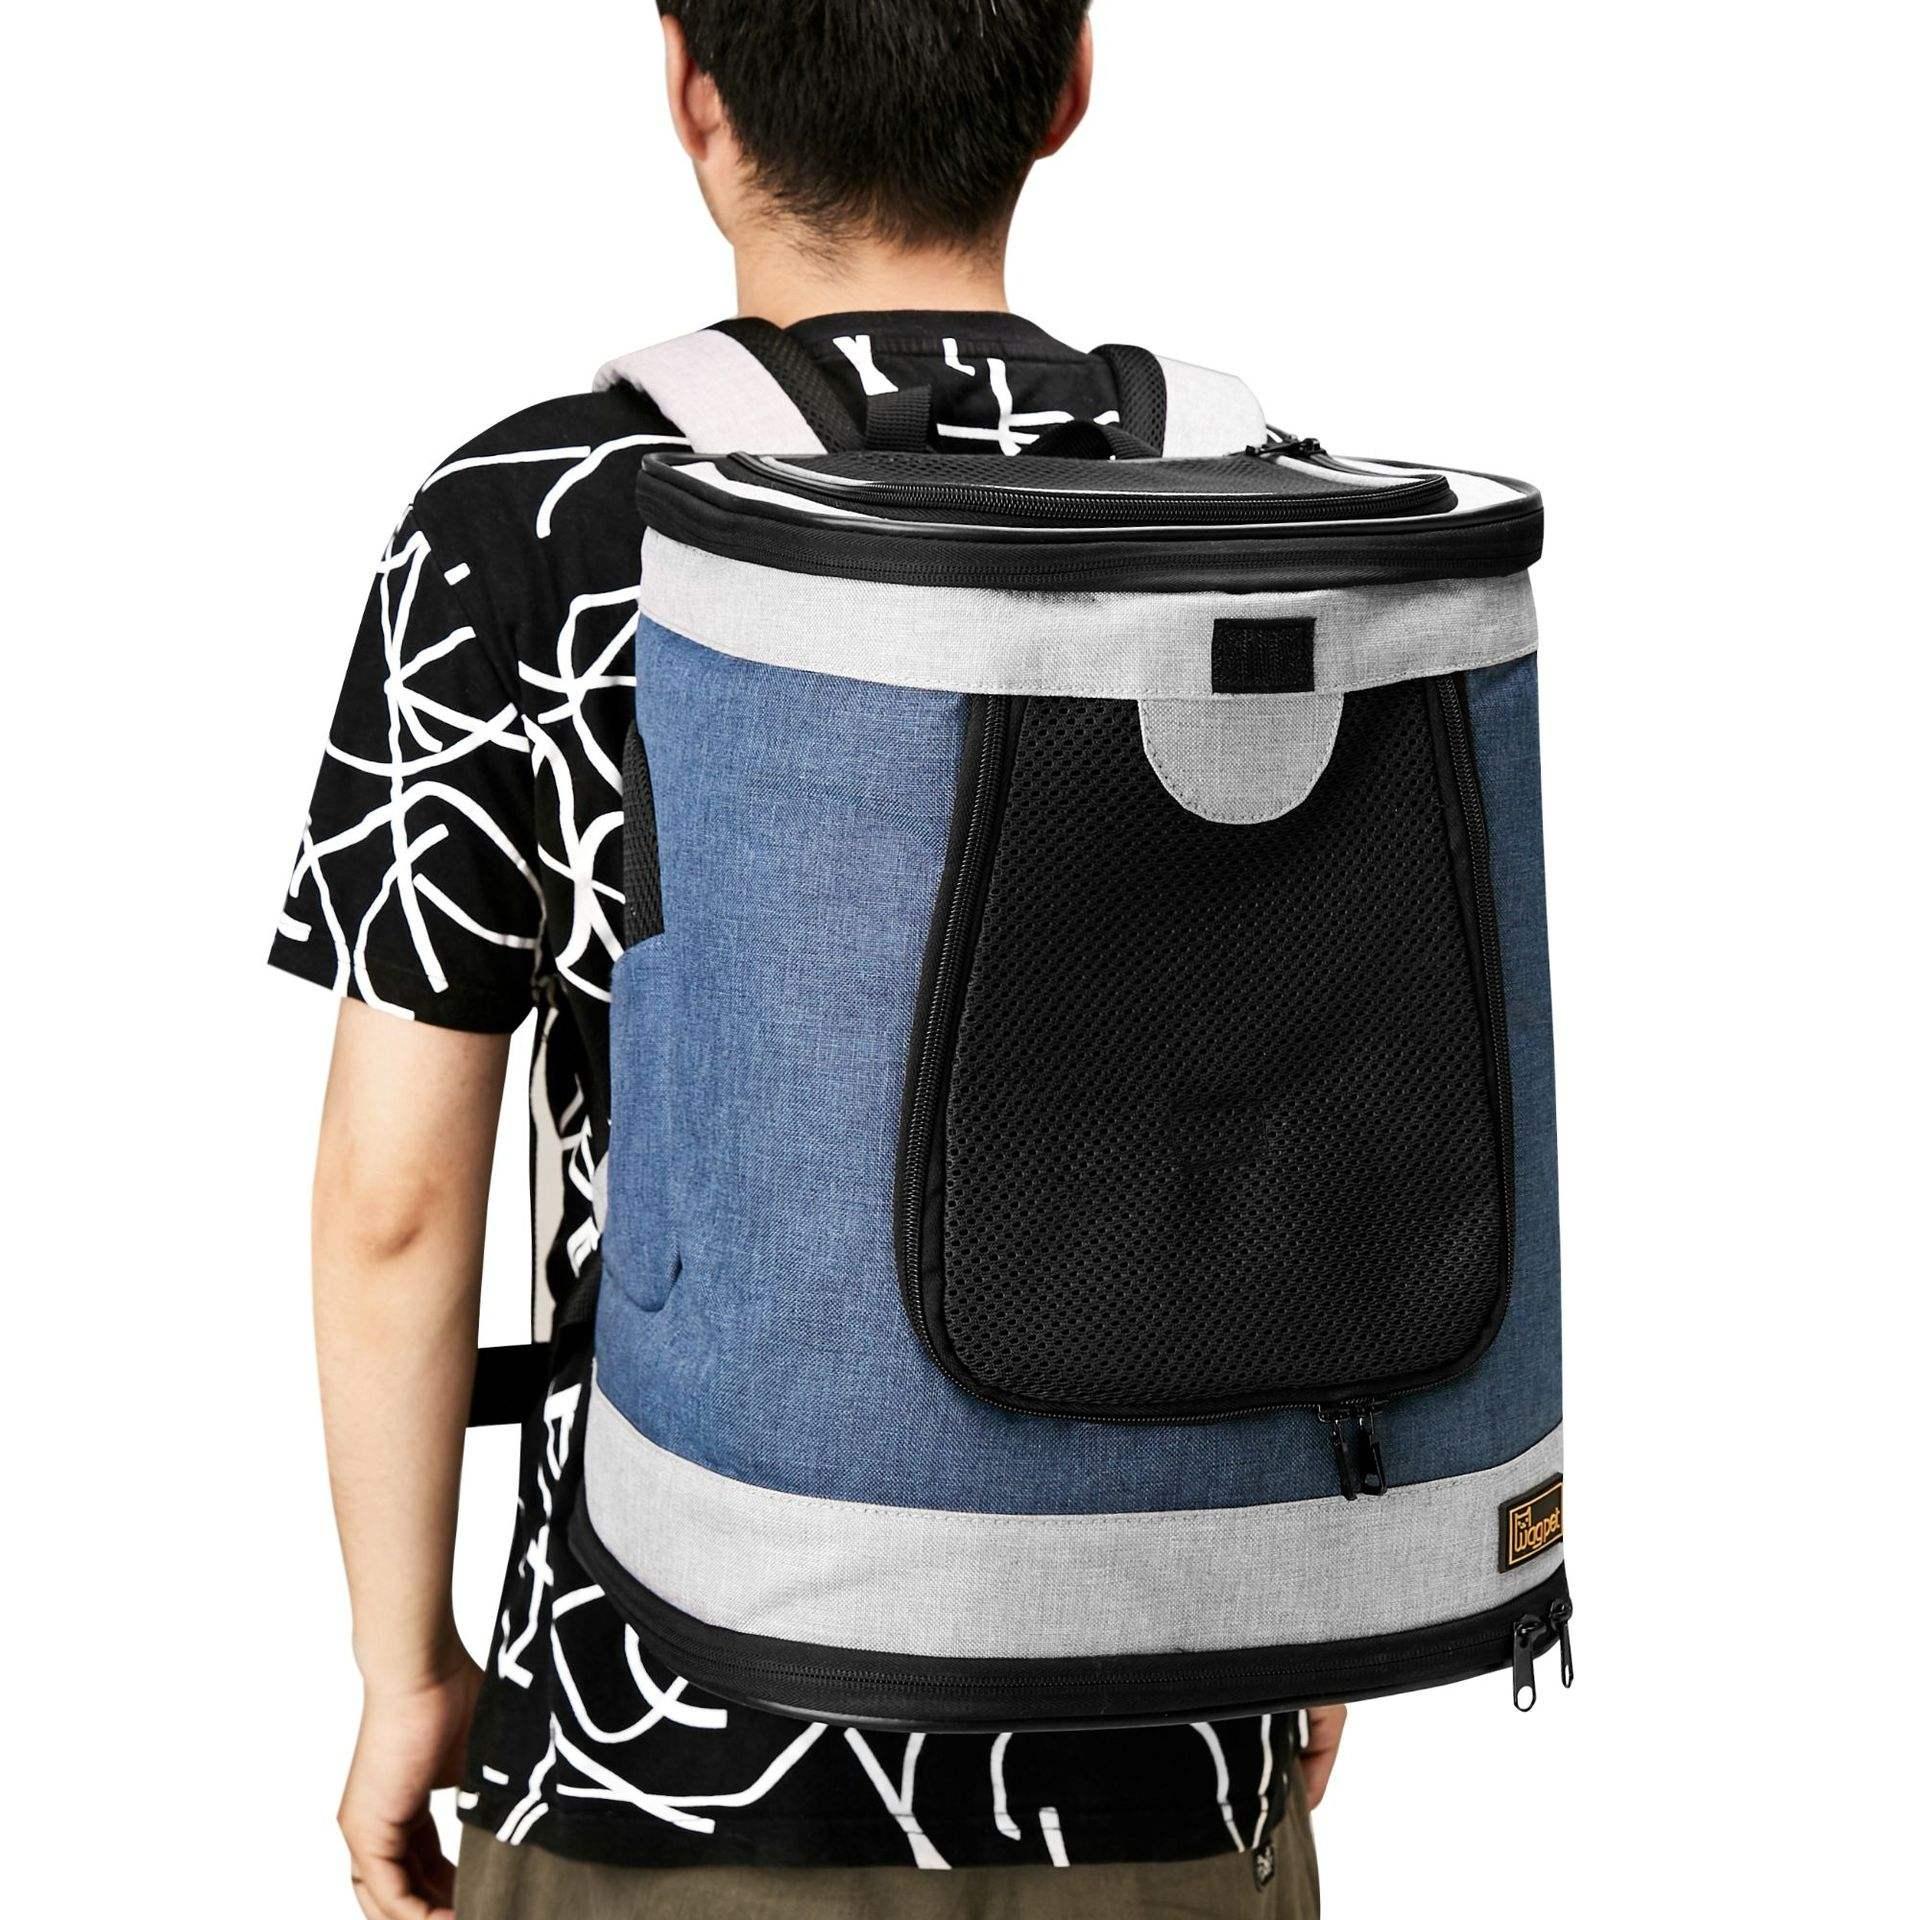 Portable Diagonal Breathable Bag For Pets Traveling Fashion Mesh Pet Carrier Bag Pack